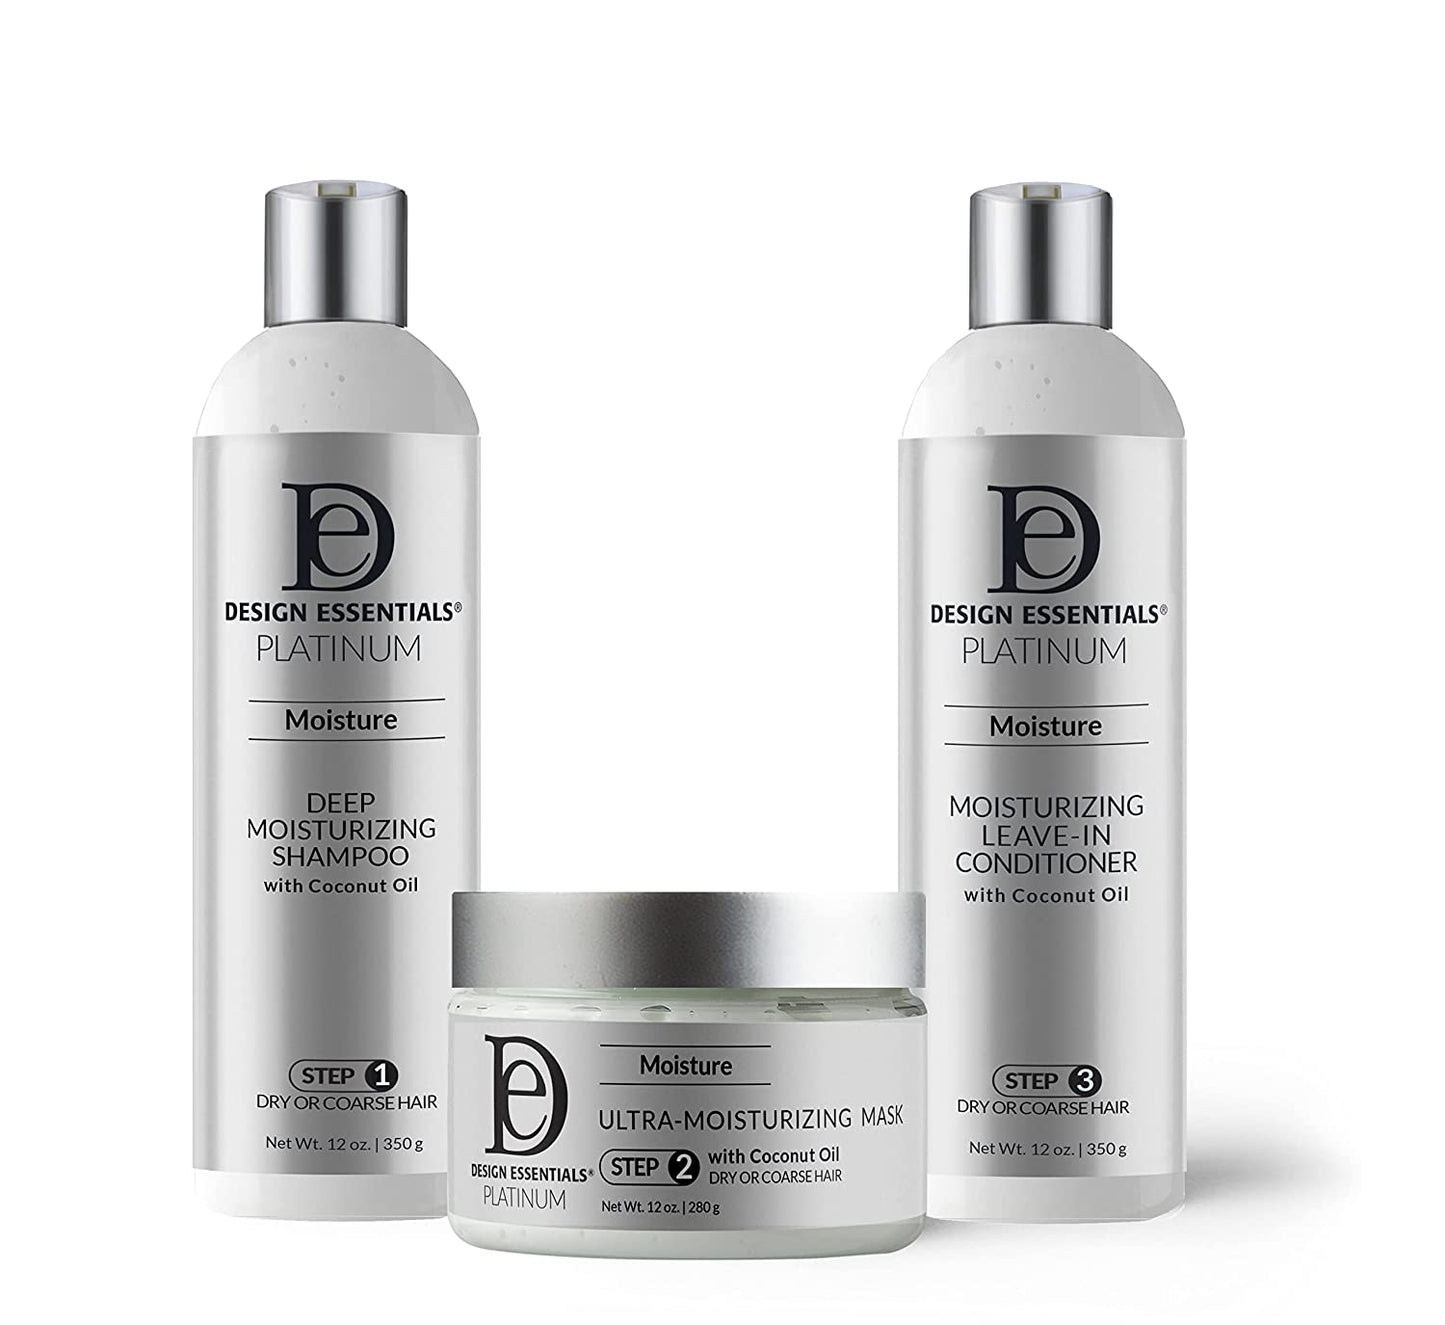 Design Essentials Platinum Deep Moisturizing Shampoo with coconut oil 12oz.